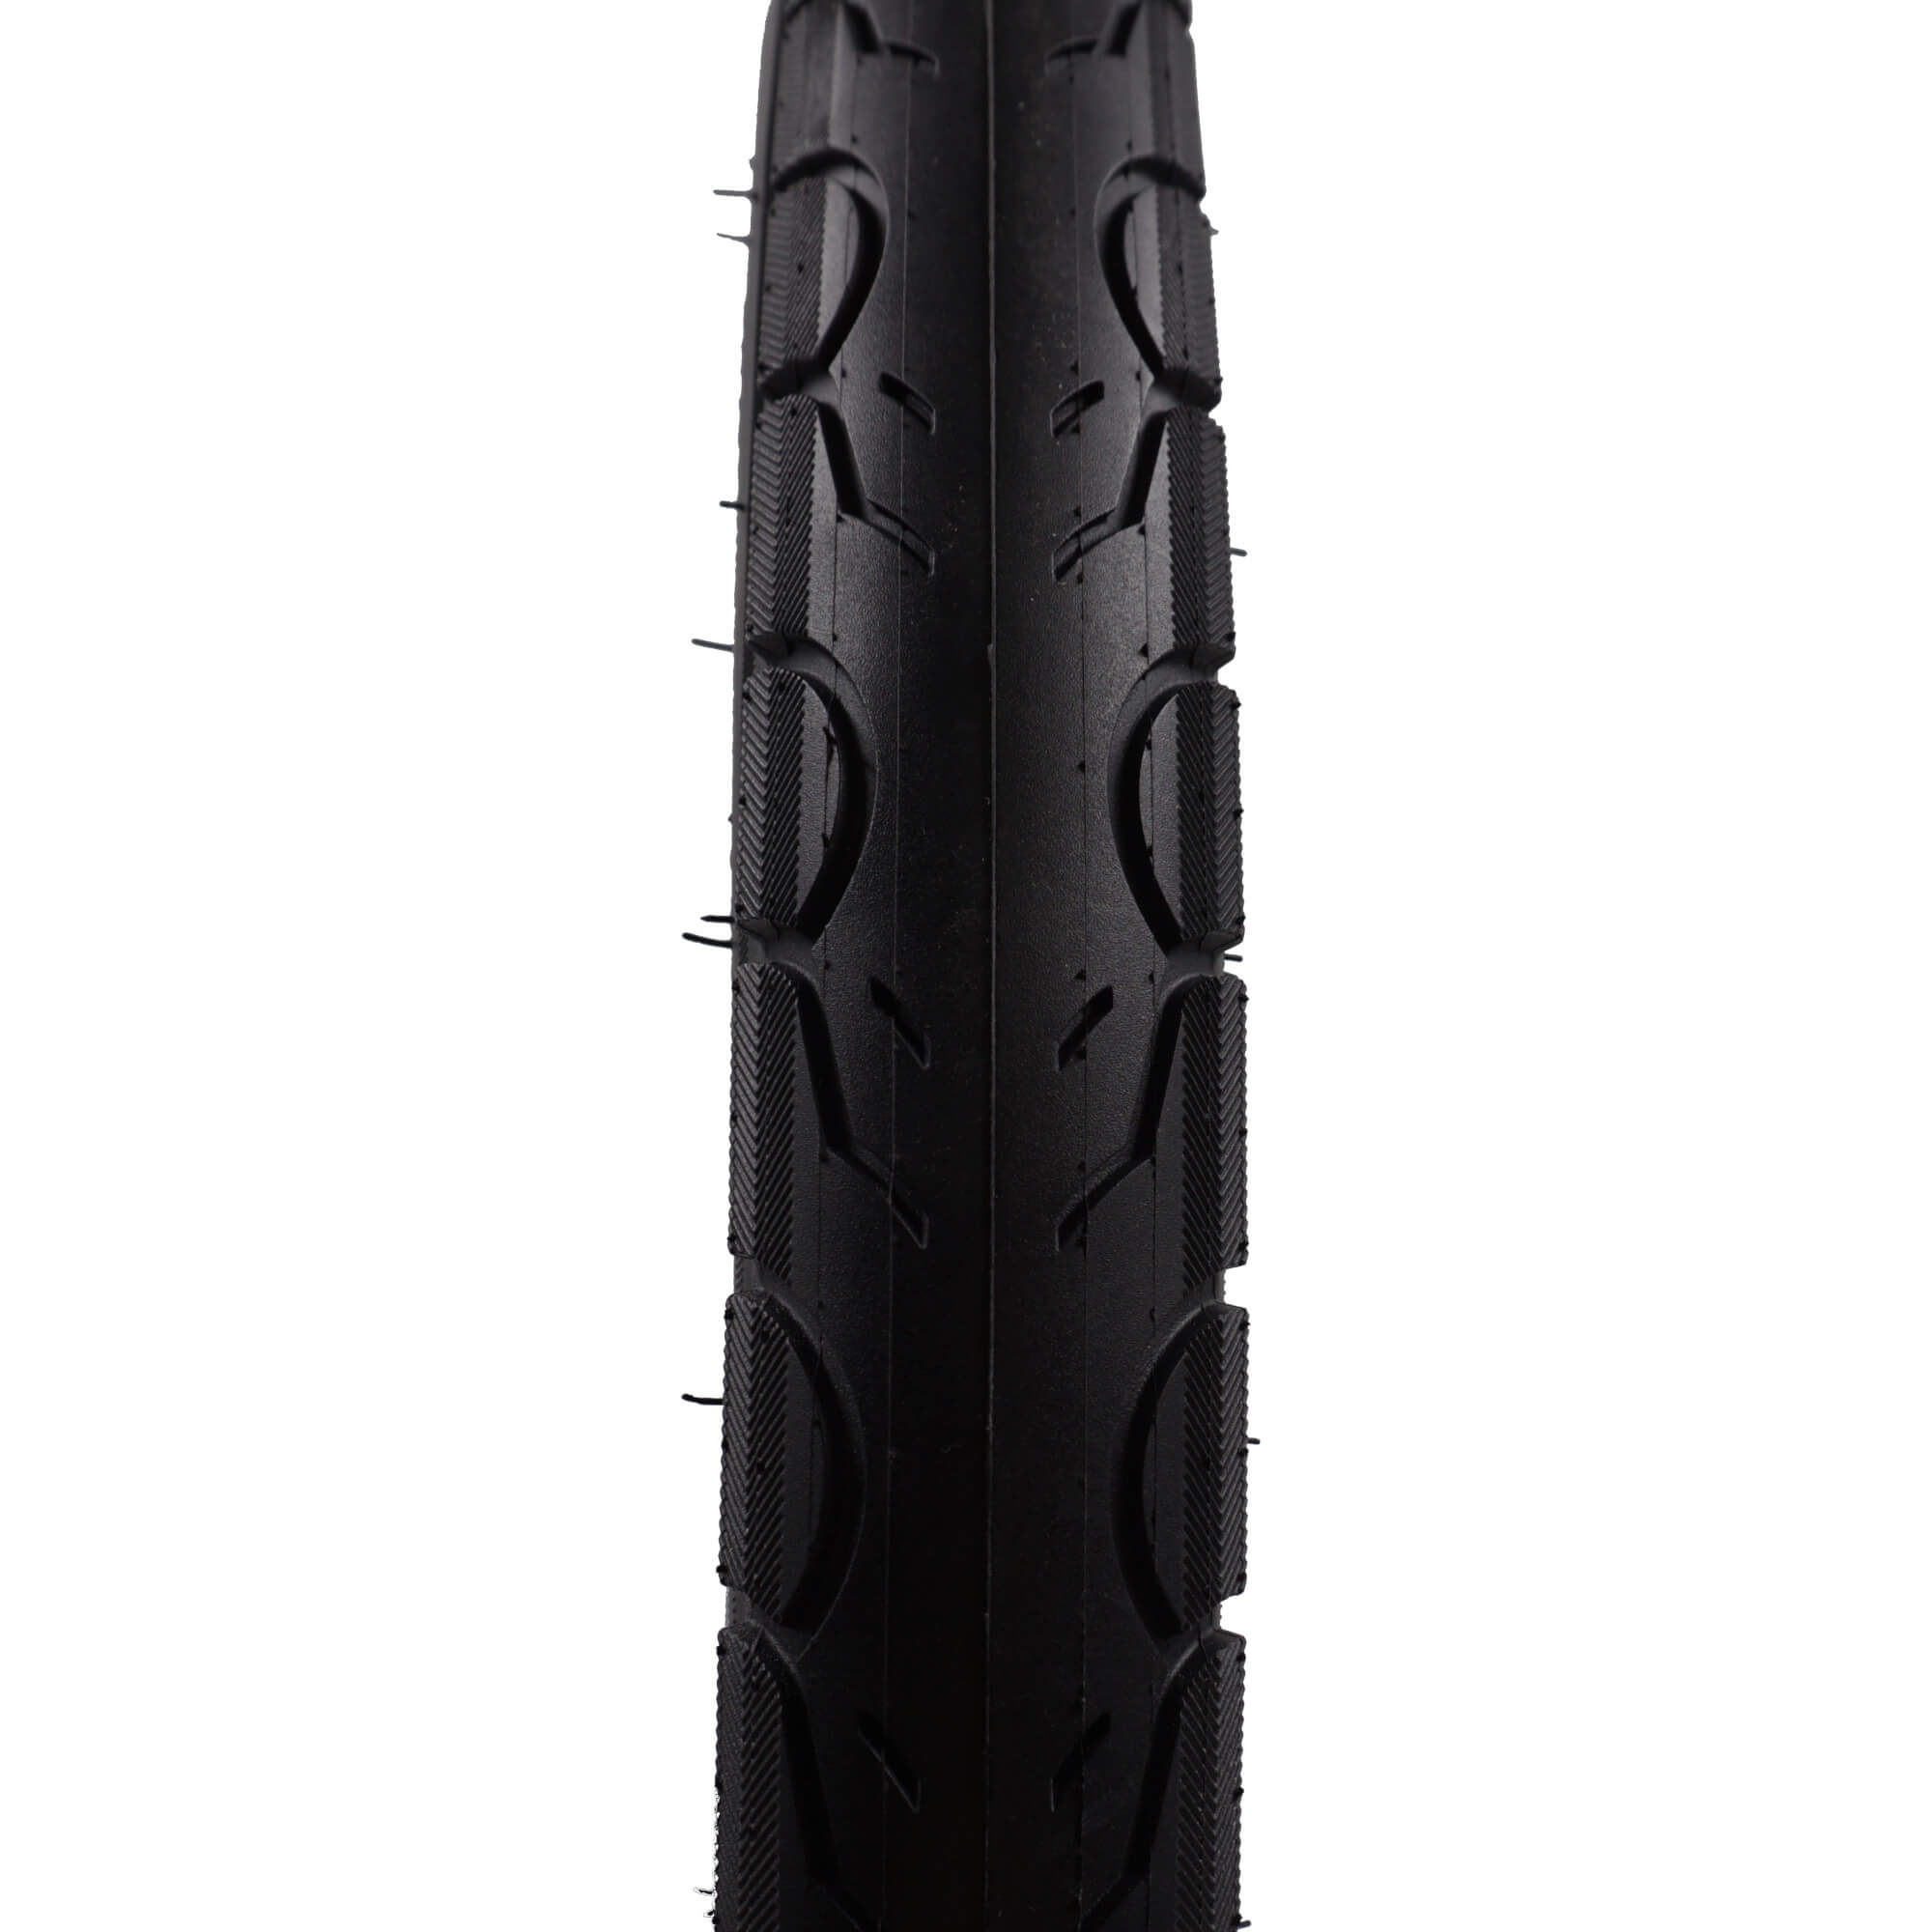 Kenda K193 Kwest 26x1.90 Semi-Slick Bike Tire with Reflective Sidewall - The Bikesmiths